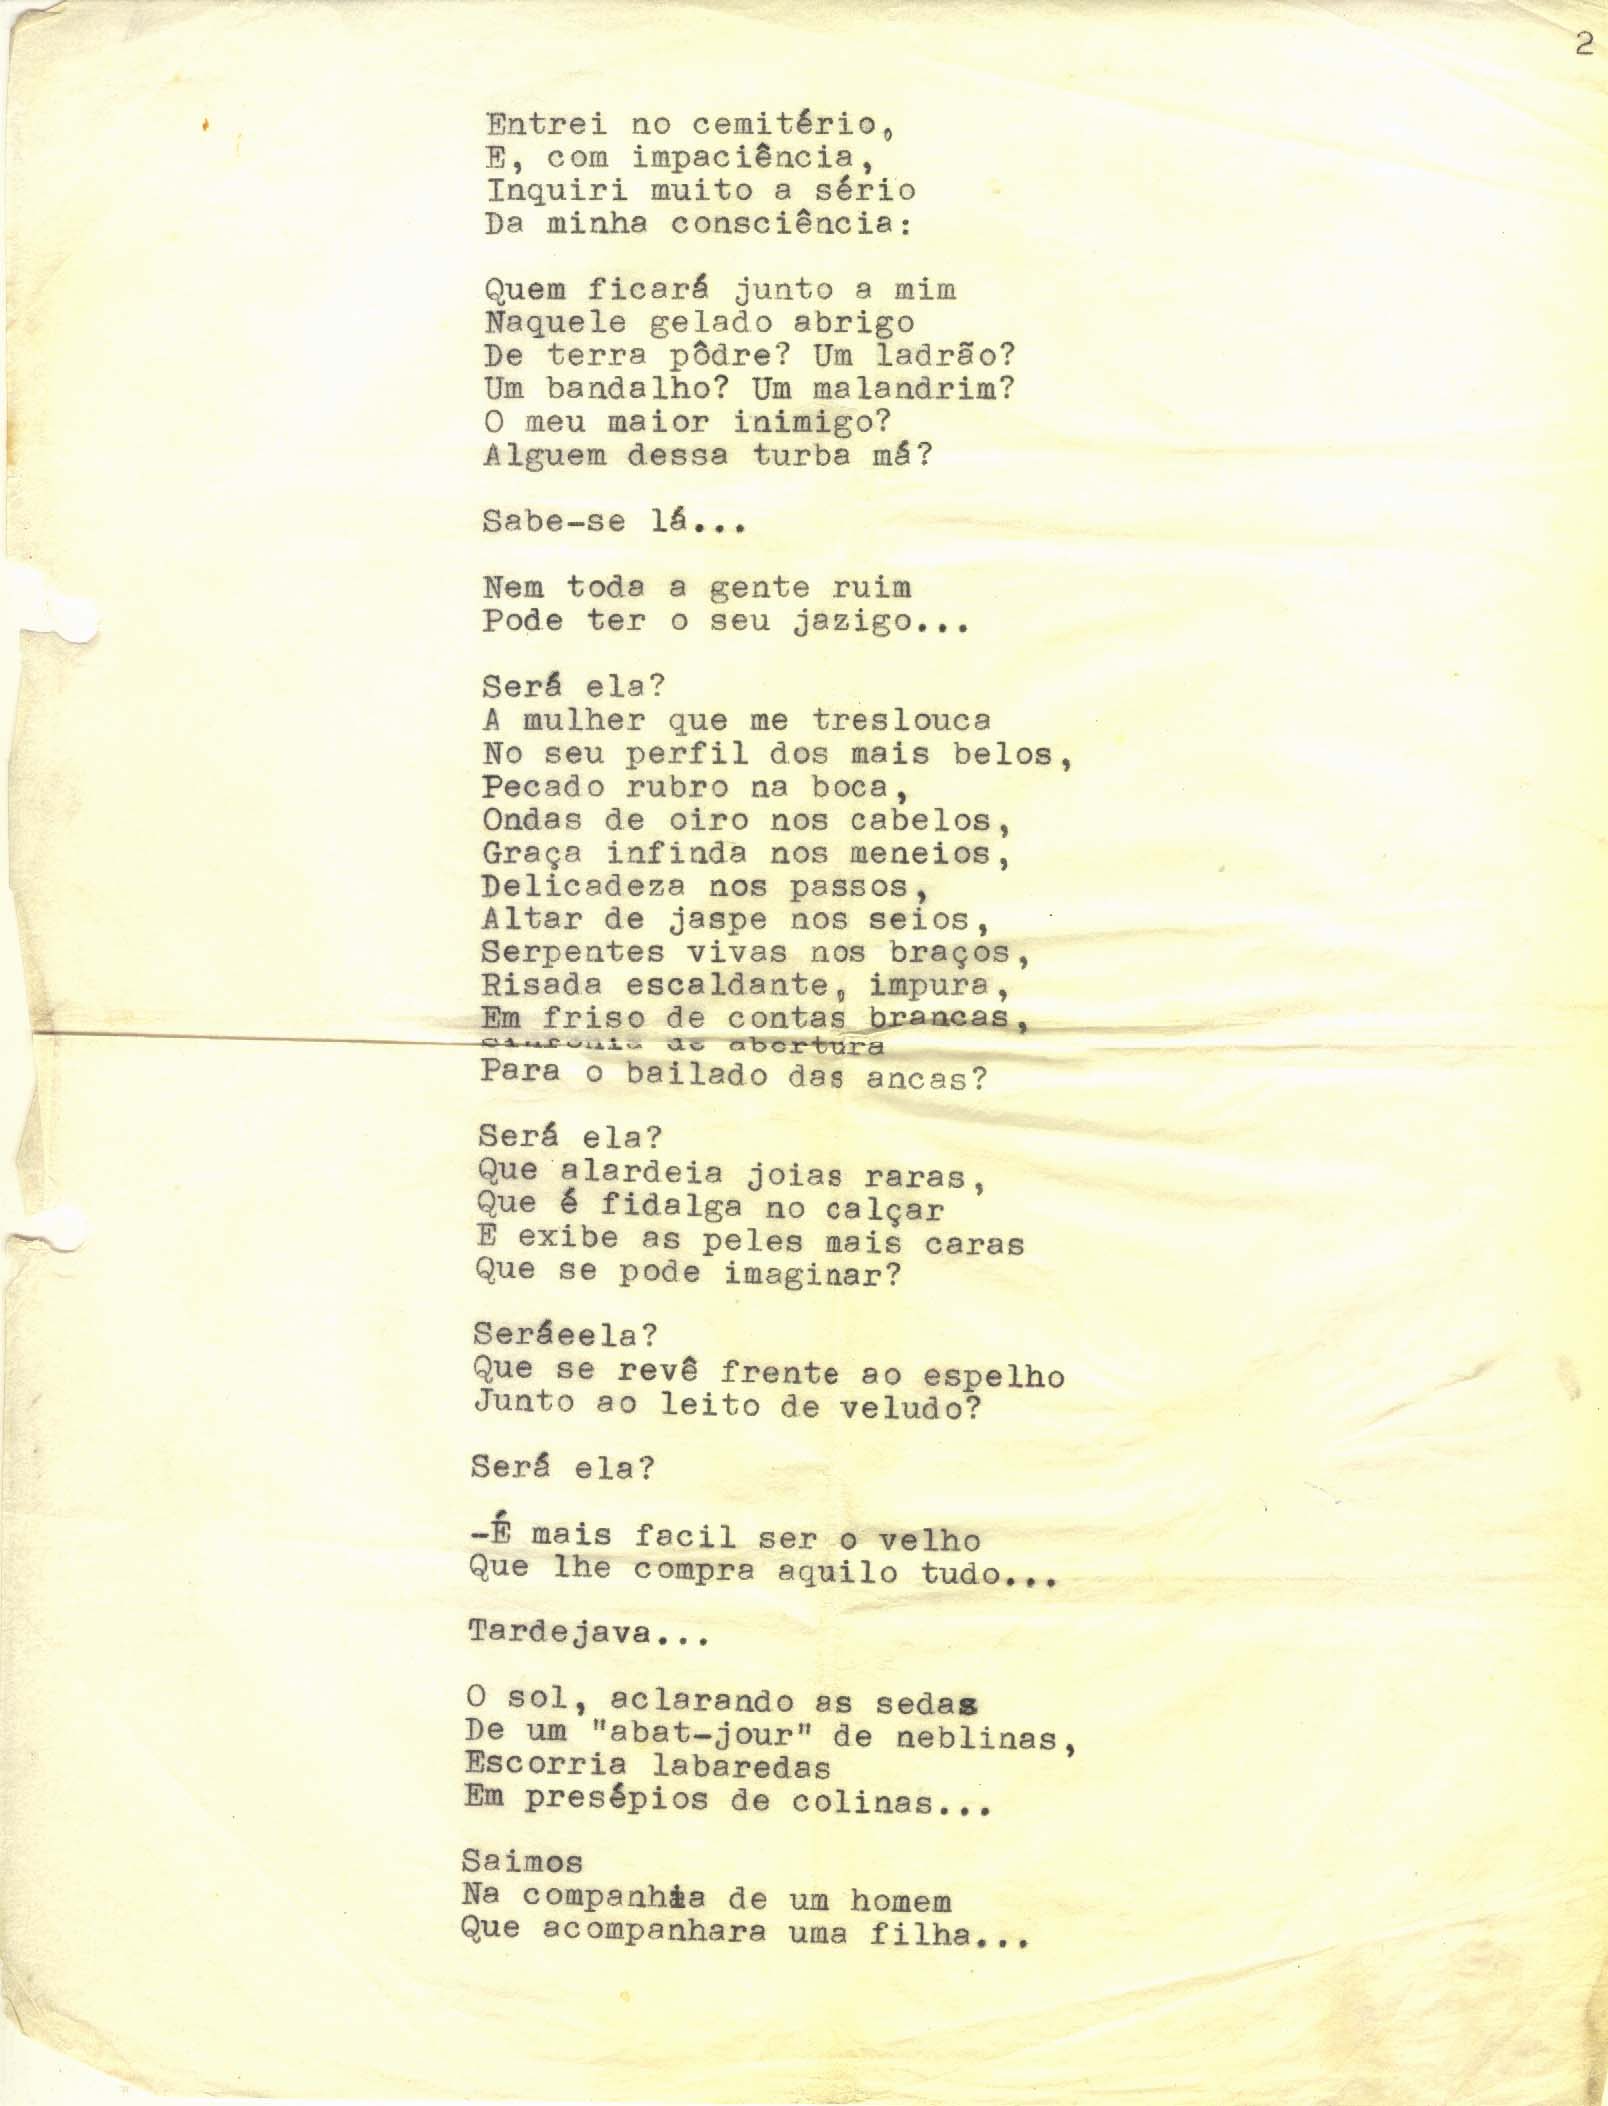 Poema triste, Carlos Conde, s/d, p.2 - Museu do Fado